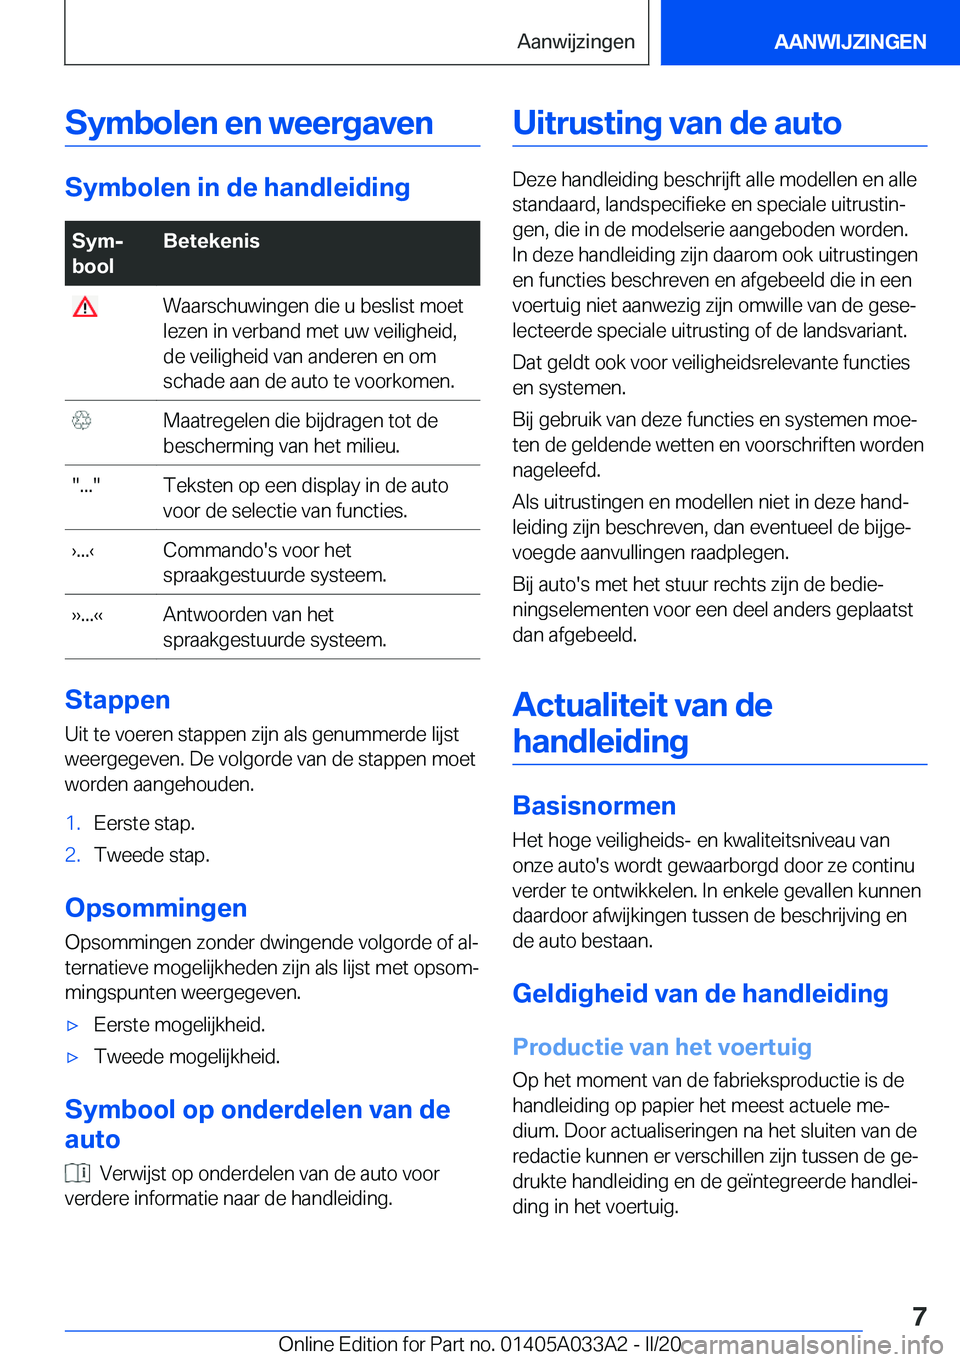 BMW M8 GRAN COUPE 2020  Instructieboekjes (in Dutch) �S�y�m�b�o�l�e�n��e�n��w�e�e�r�g�a�v�e�n
�S�y�m�b�o�l�e�n��i�n��d�e��h�a�n�d�l�e�i�d�i�n�g
�S�y�mj
�b�o�o�l�B�e�t�e�k�e�n�i�s��W�a�a�r�s�c�h�u�w�i�n�g�e�n��d�i�e��u��b�e�s�l�i�s�t��m�o�e�t
